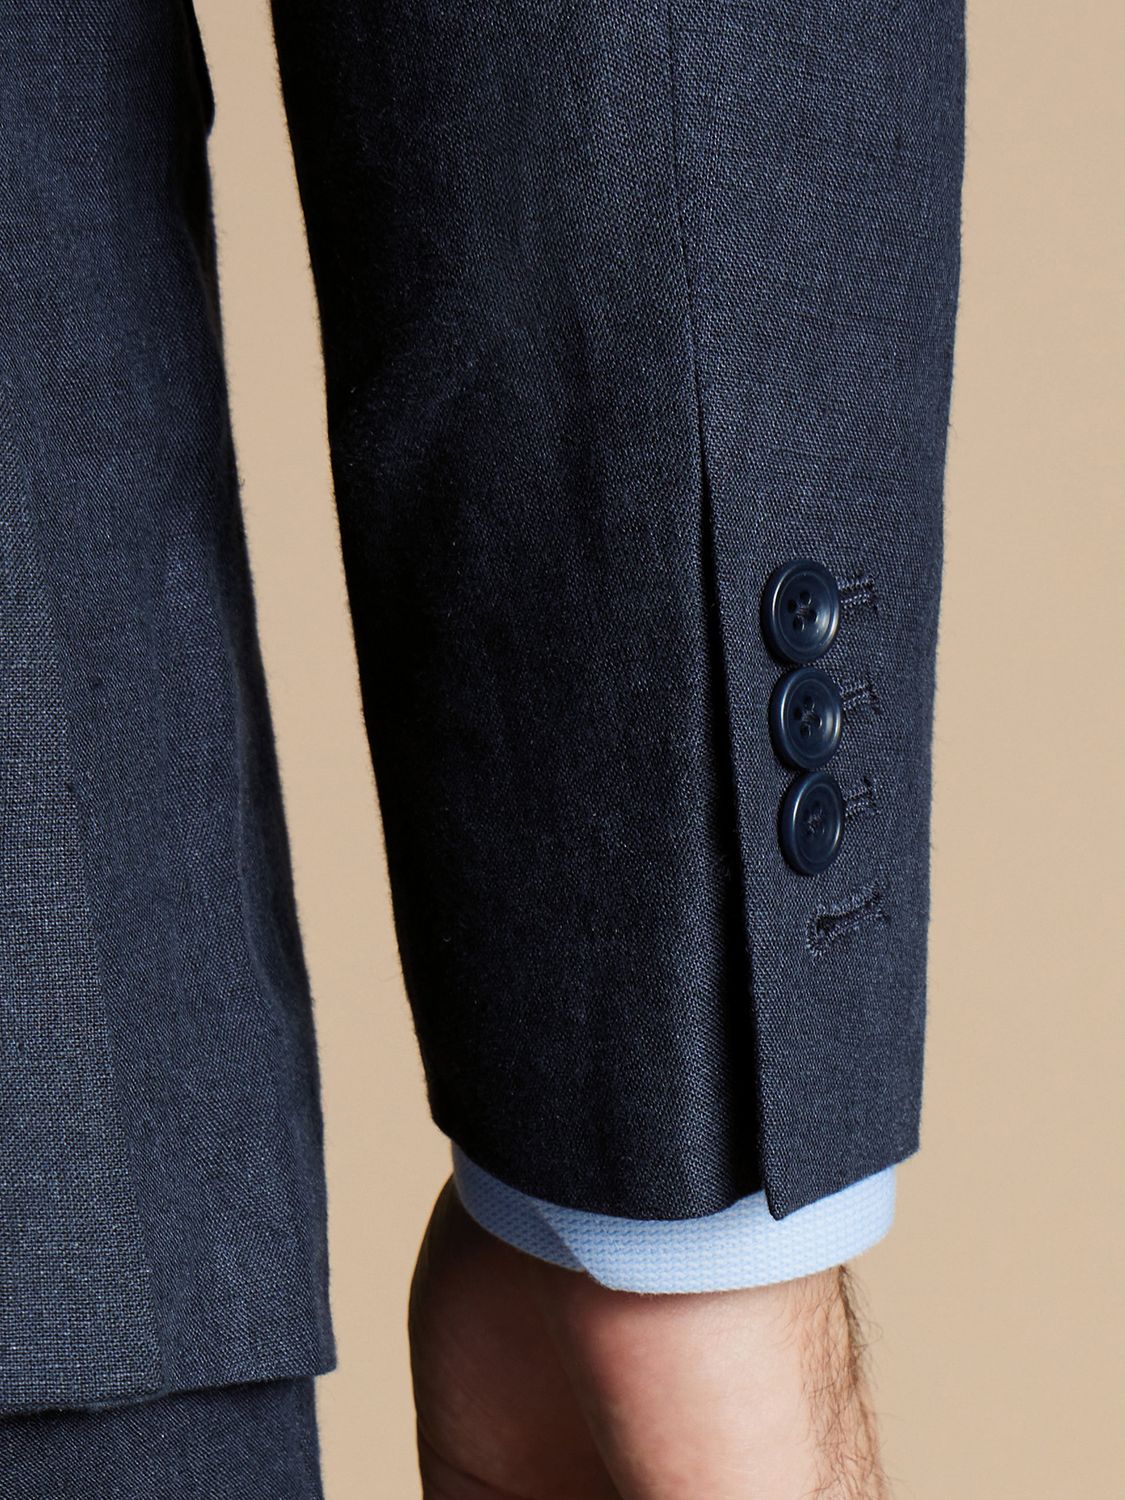 Charles Tyrwhitt Linen Classic Fit Jacket, Dark Navy, 40R